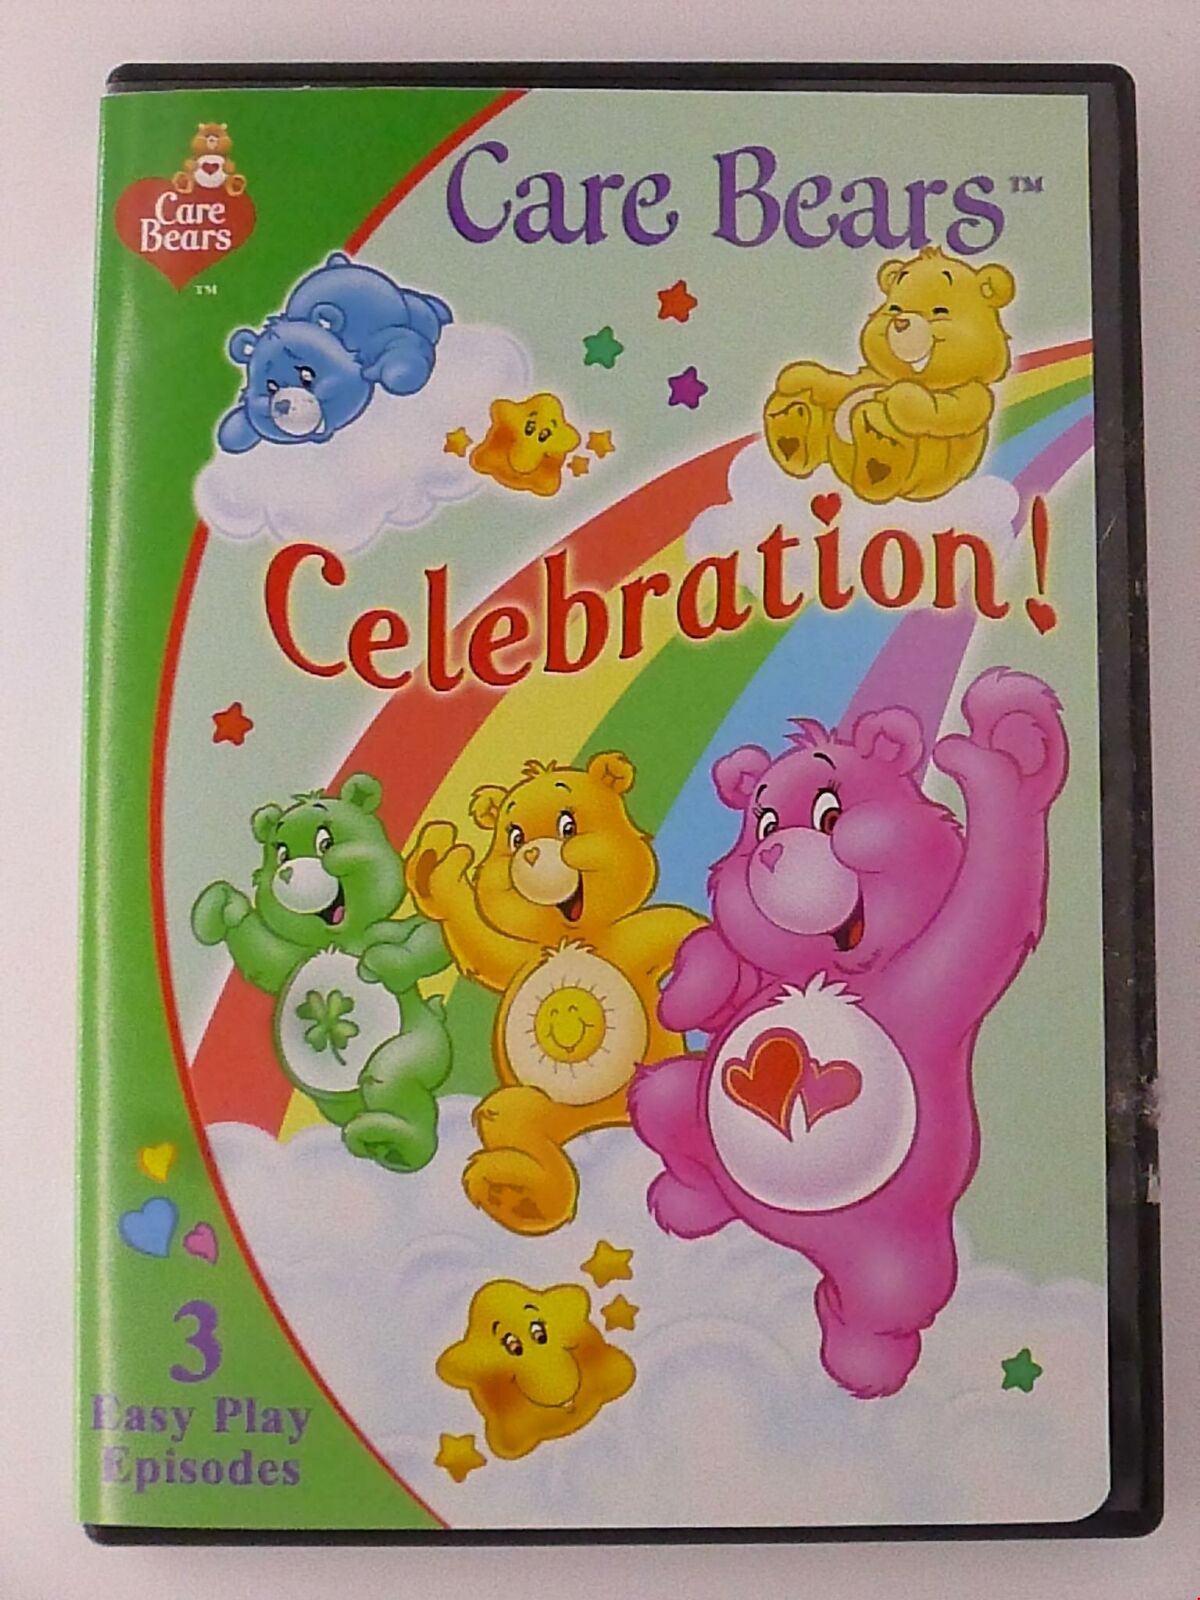 Care Bears - Celebration (DVD, 3 episodes) - H0516